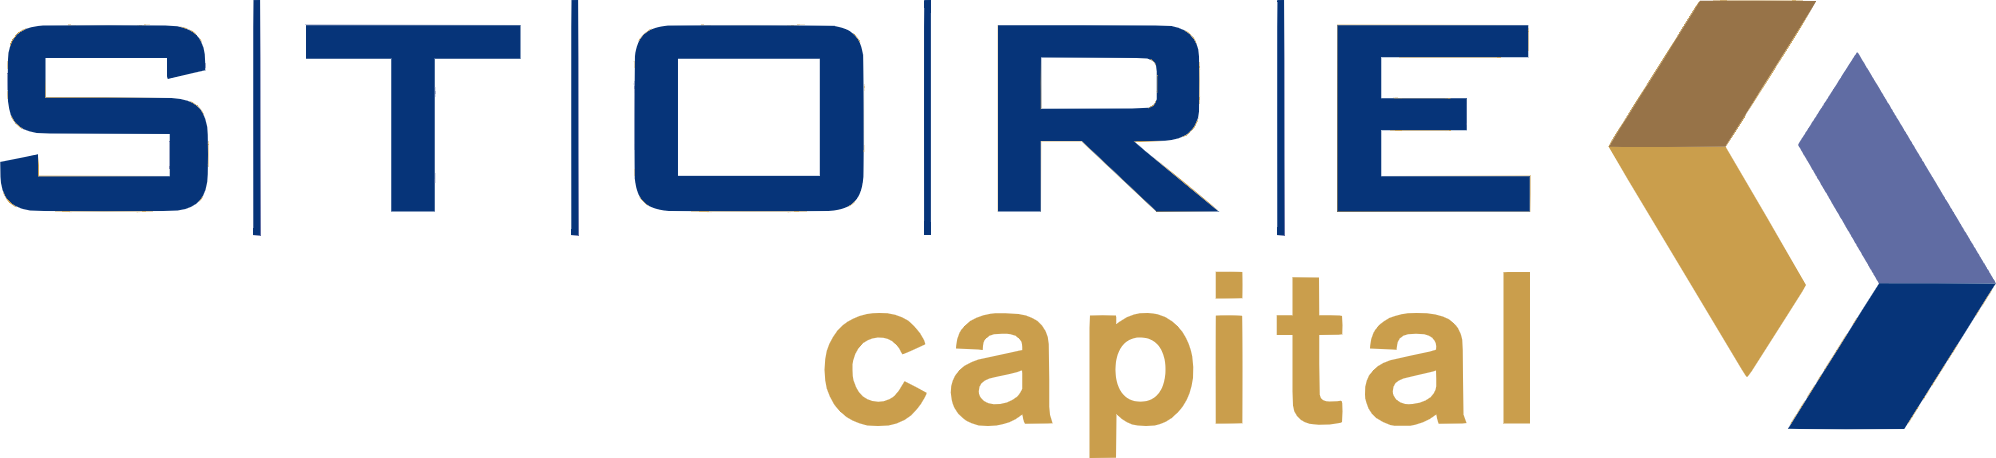 STORE Capital
 logo large (transparent PNG)